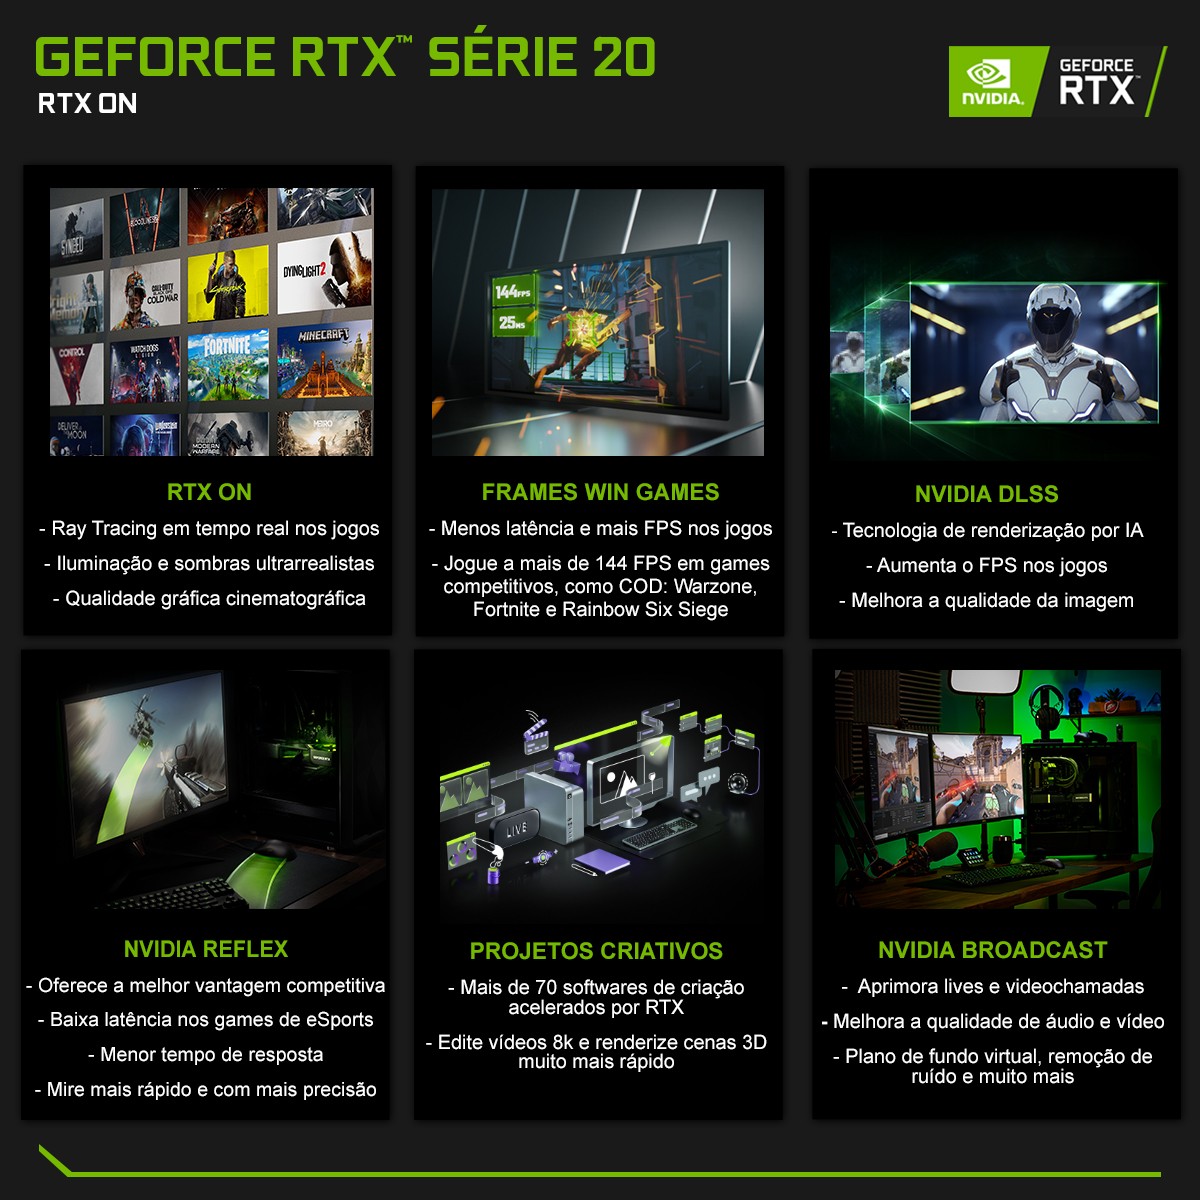 Placa de Vídeo Asus NVIDIA Geforce RTX 2070 Advanced Dual, 8GB, GDDR6, 256Bit, DUAL-RTX2070-A8G